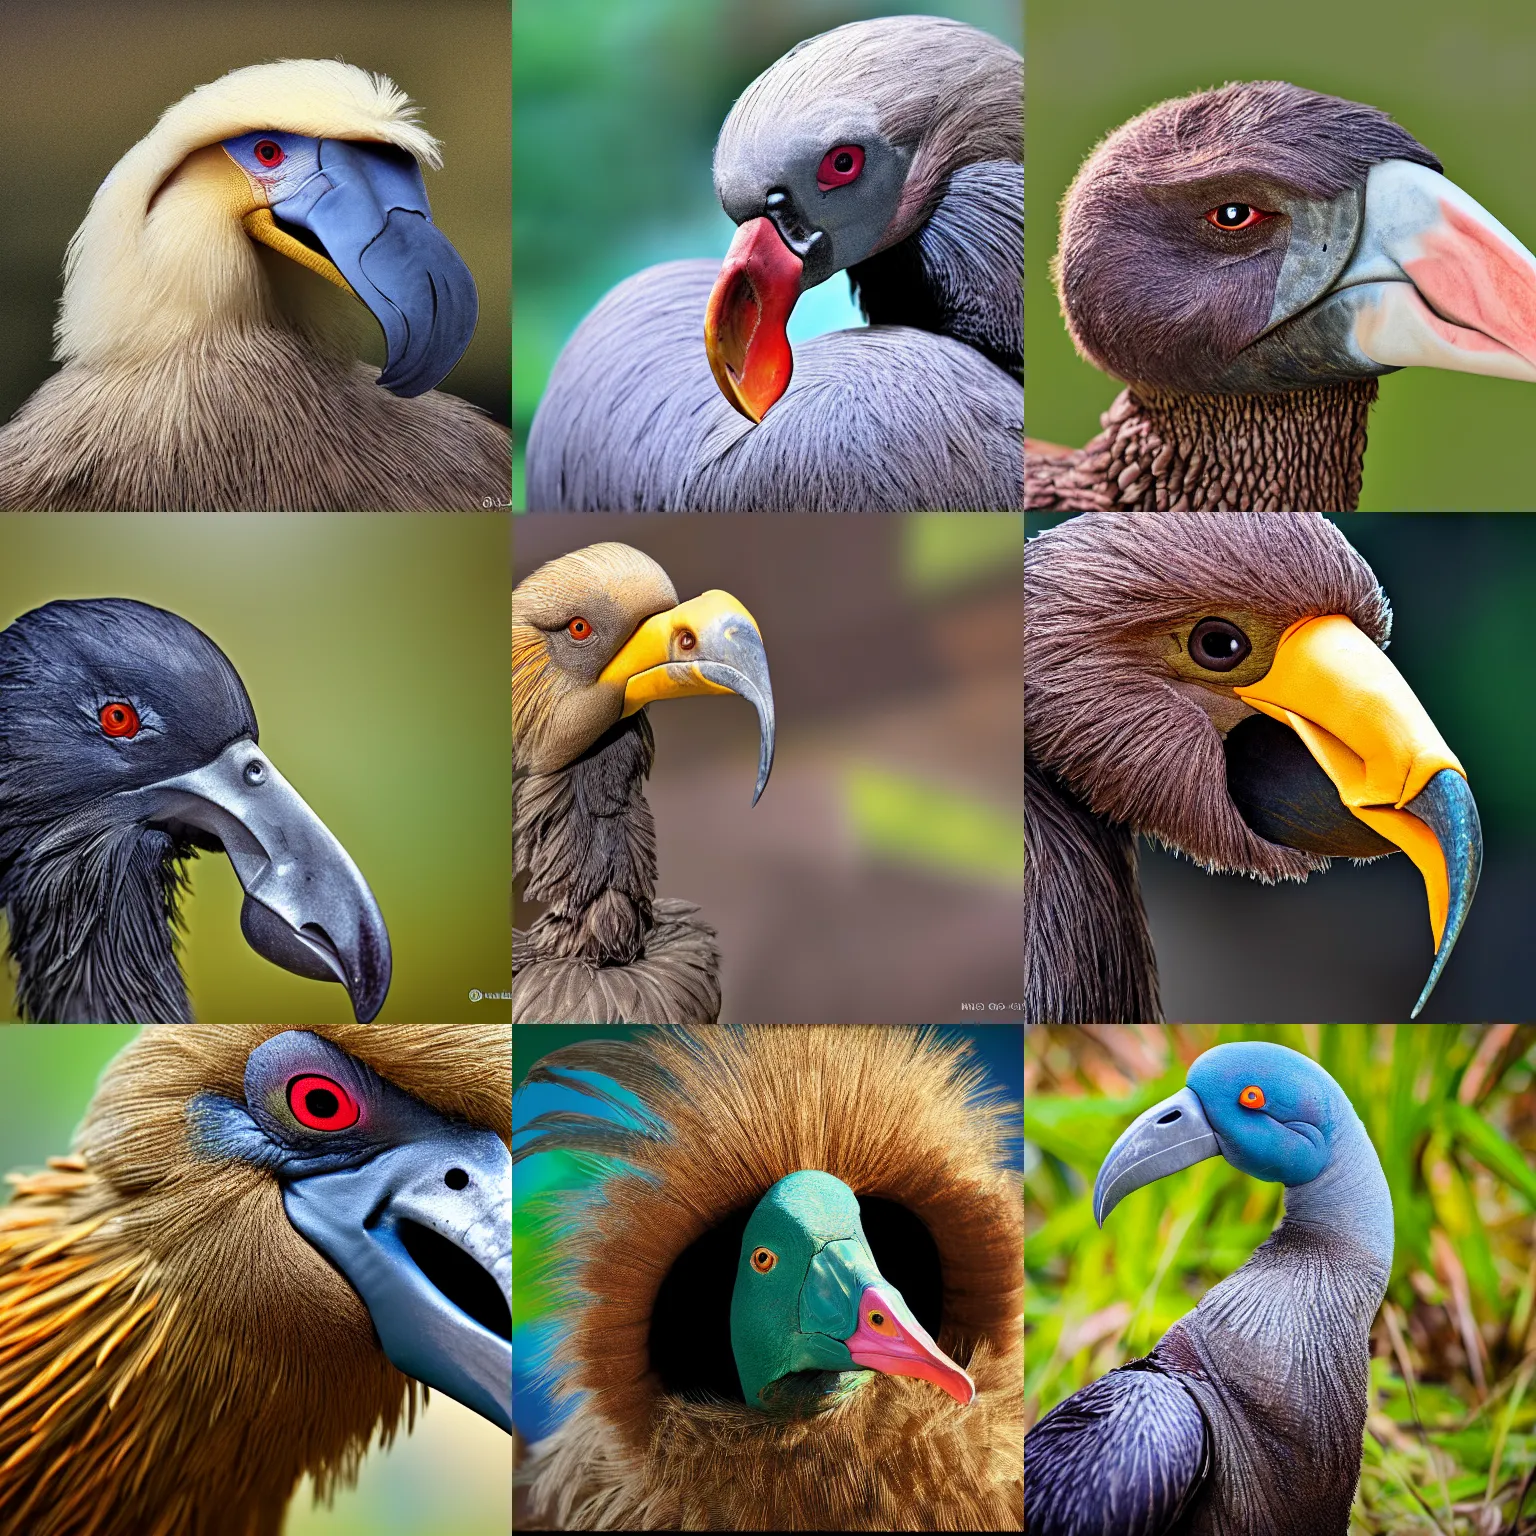 Prompt: color photograph of a dodo bird, photorealistic, hyperrealistic, UHD, 4k